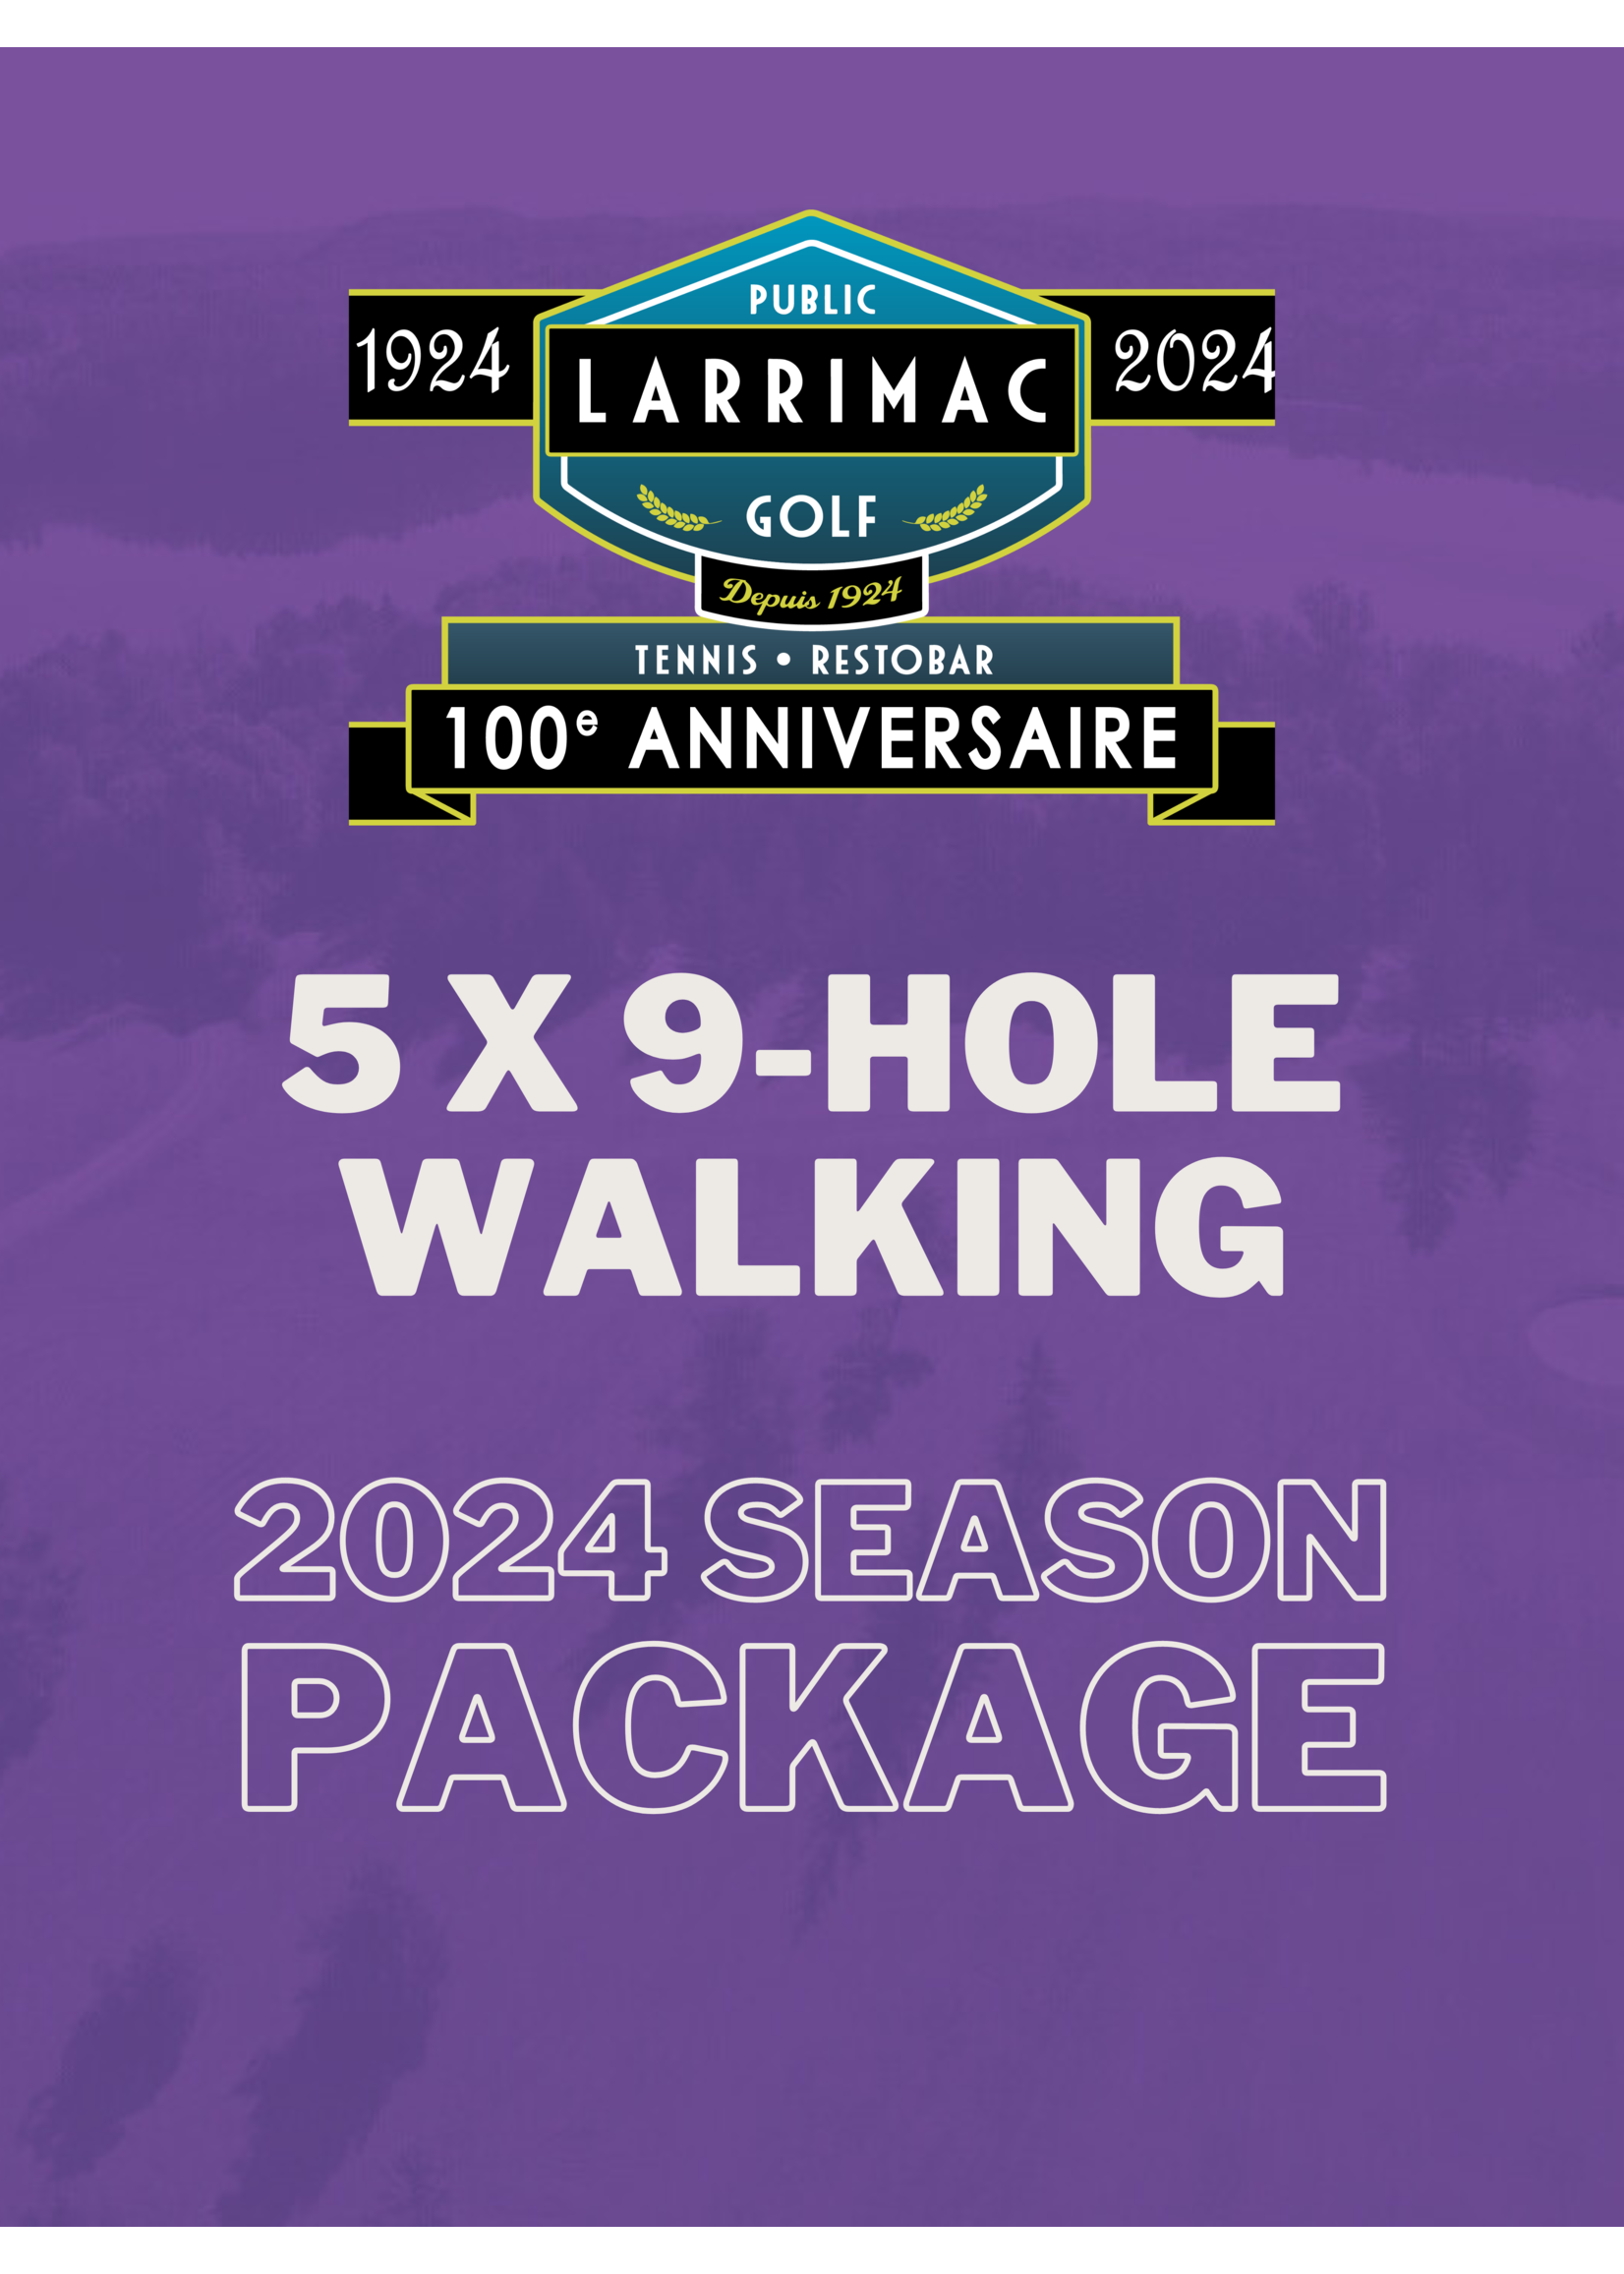 2024 packages 5 x 9 Hole Walking Package (2024 Season)